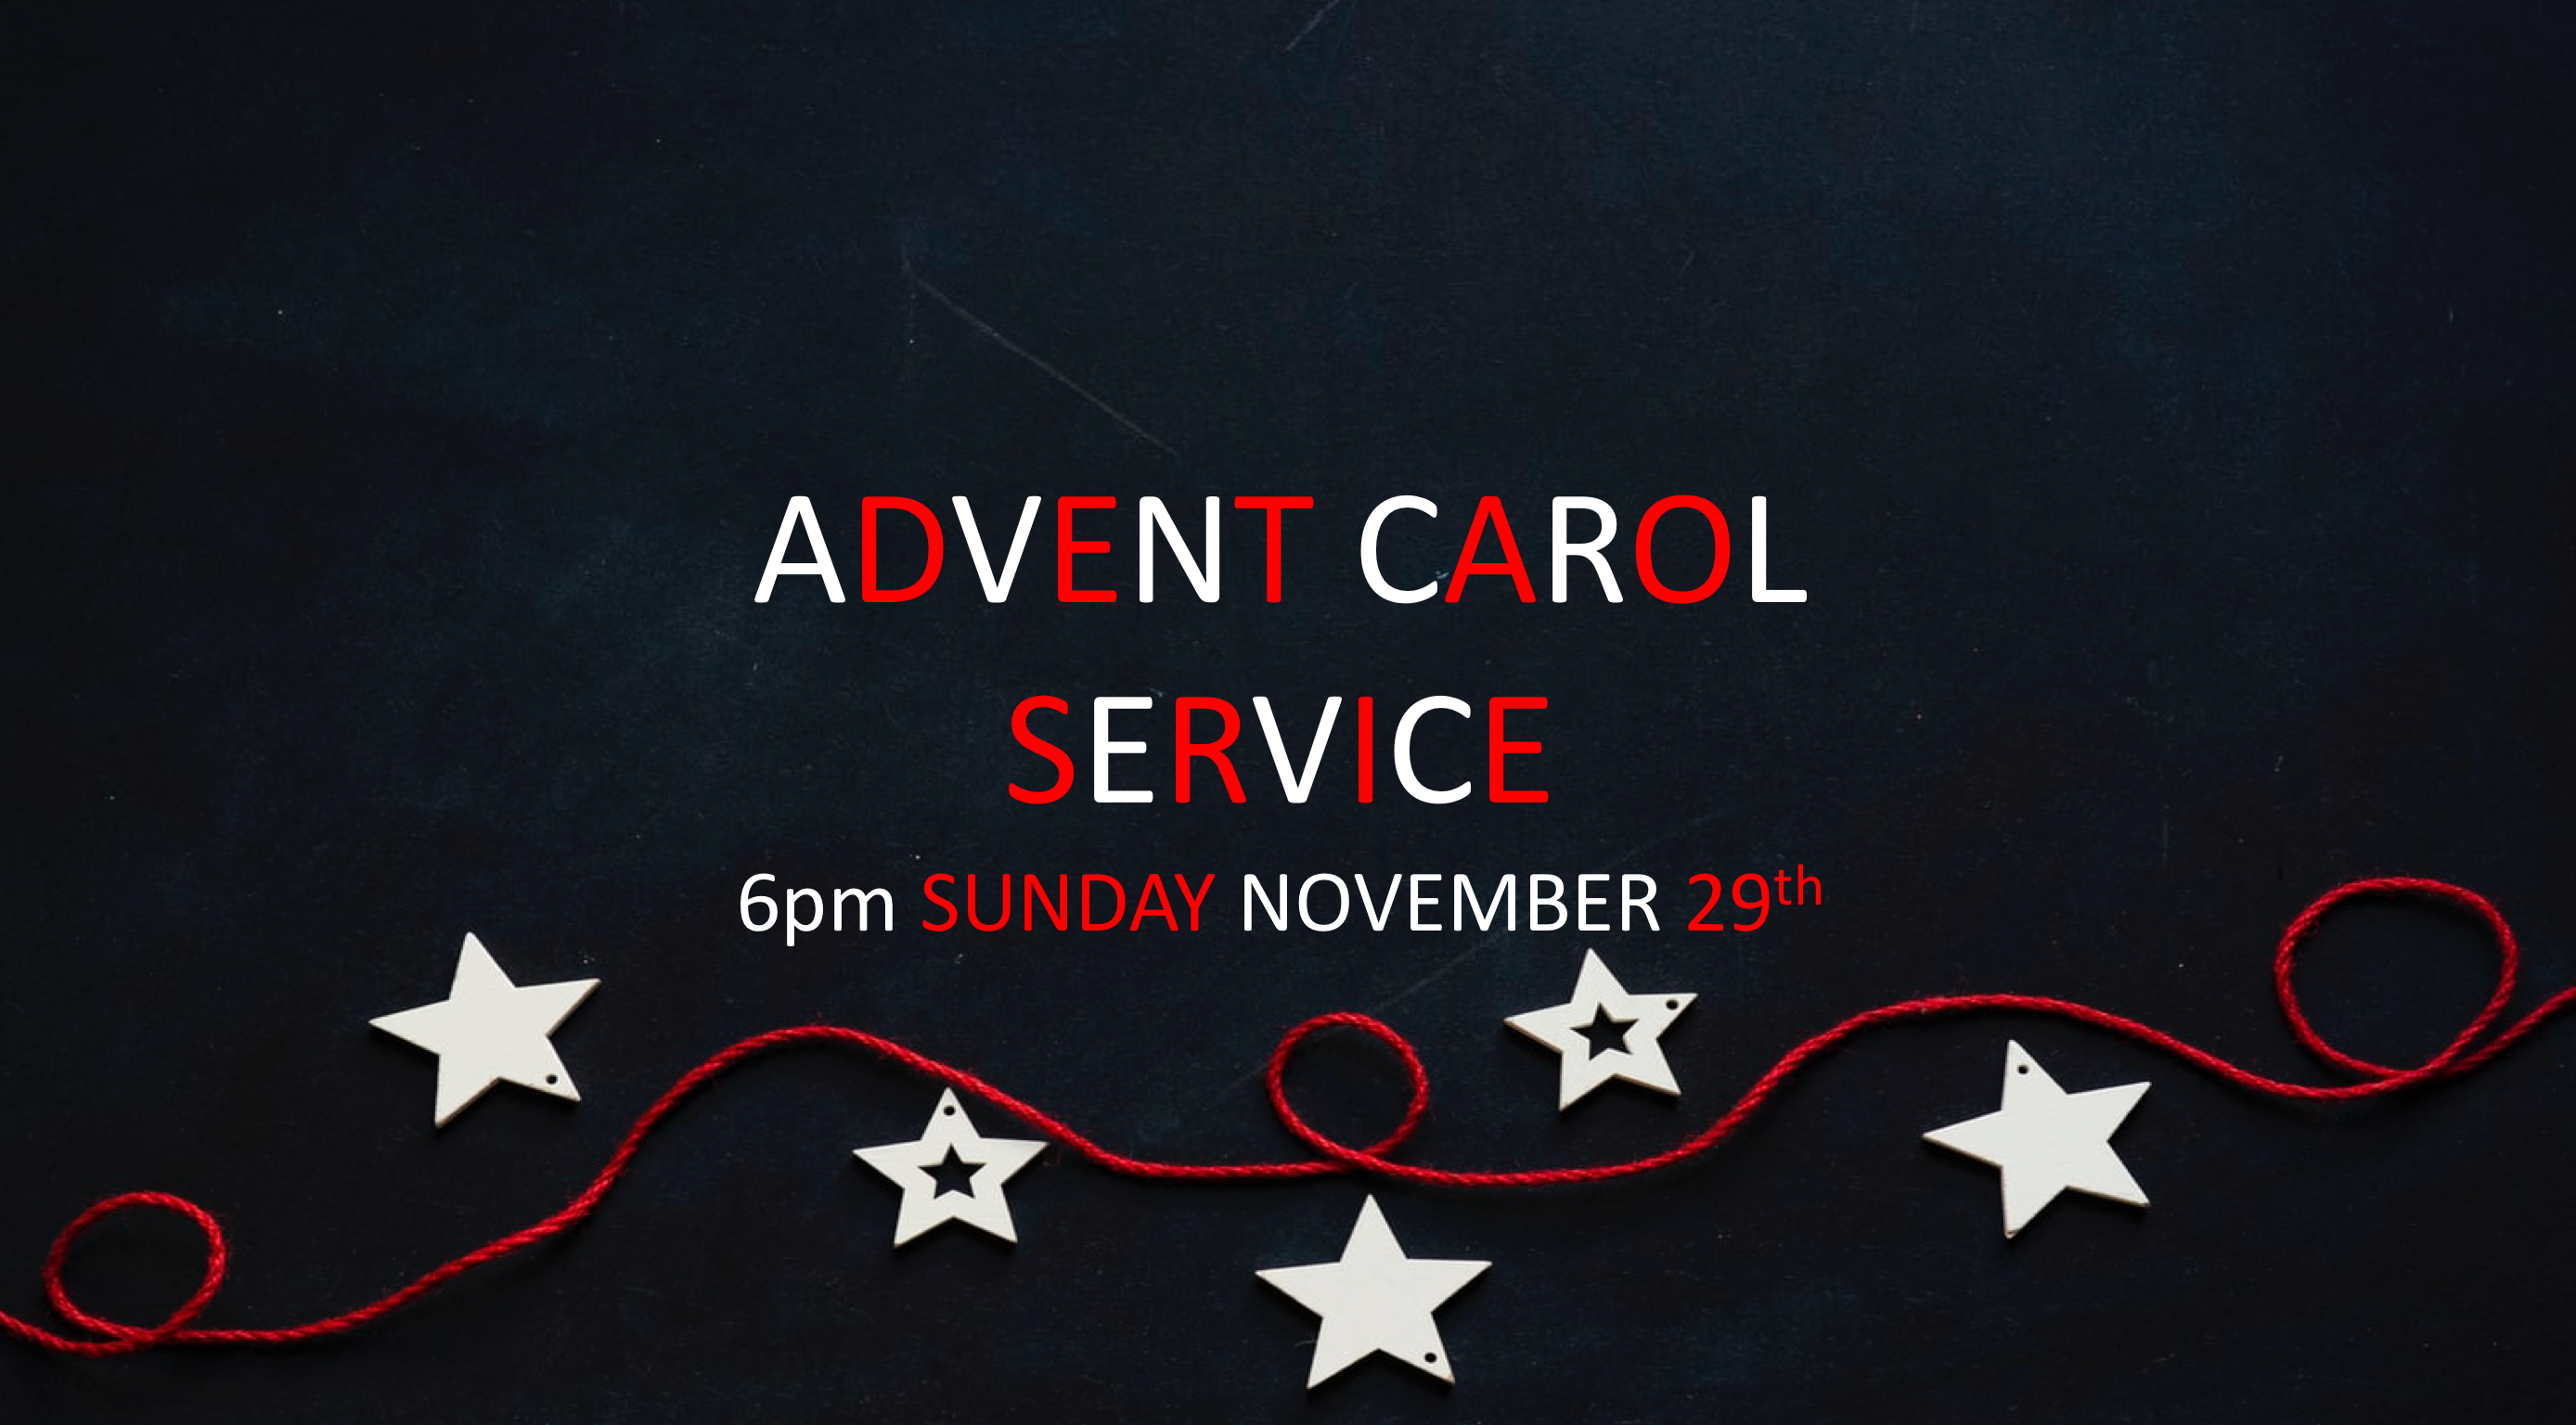 Advent Carol Service – catch up